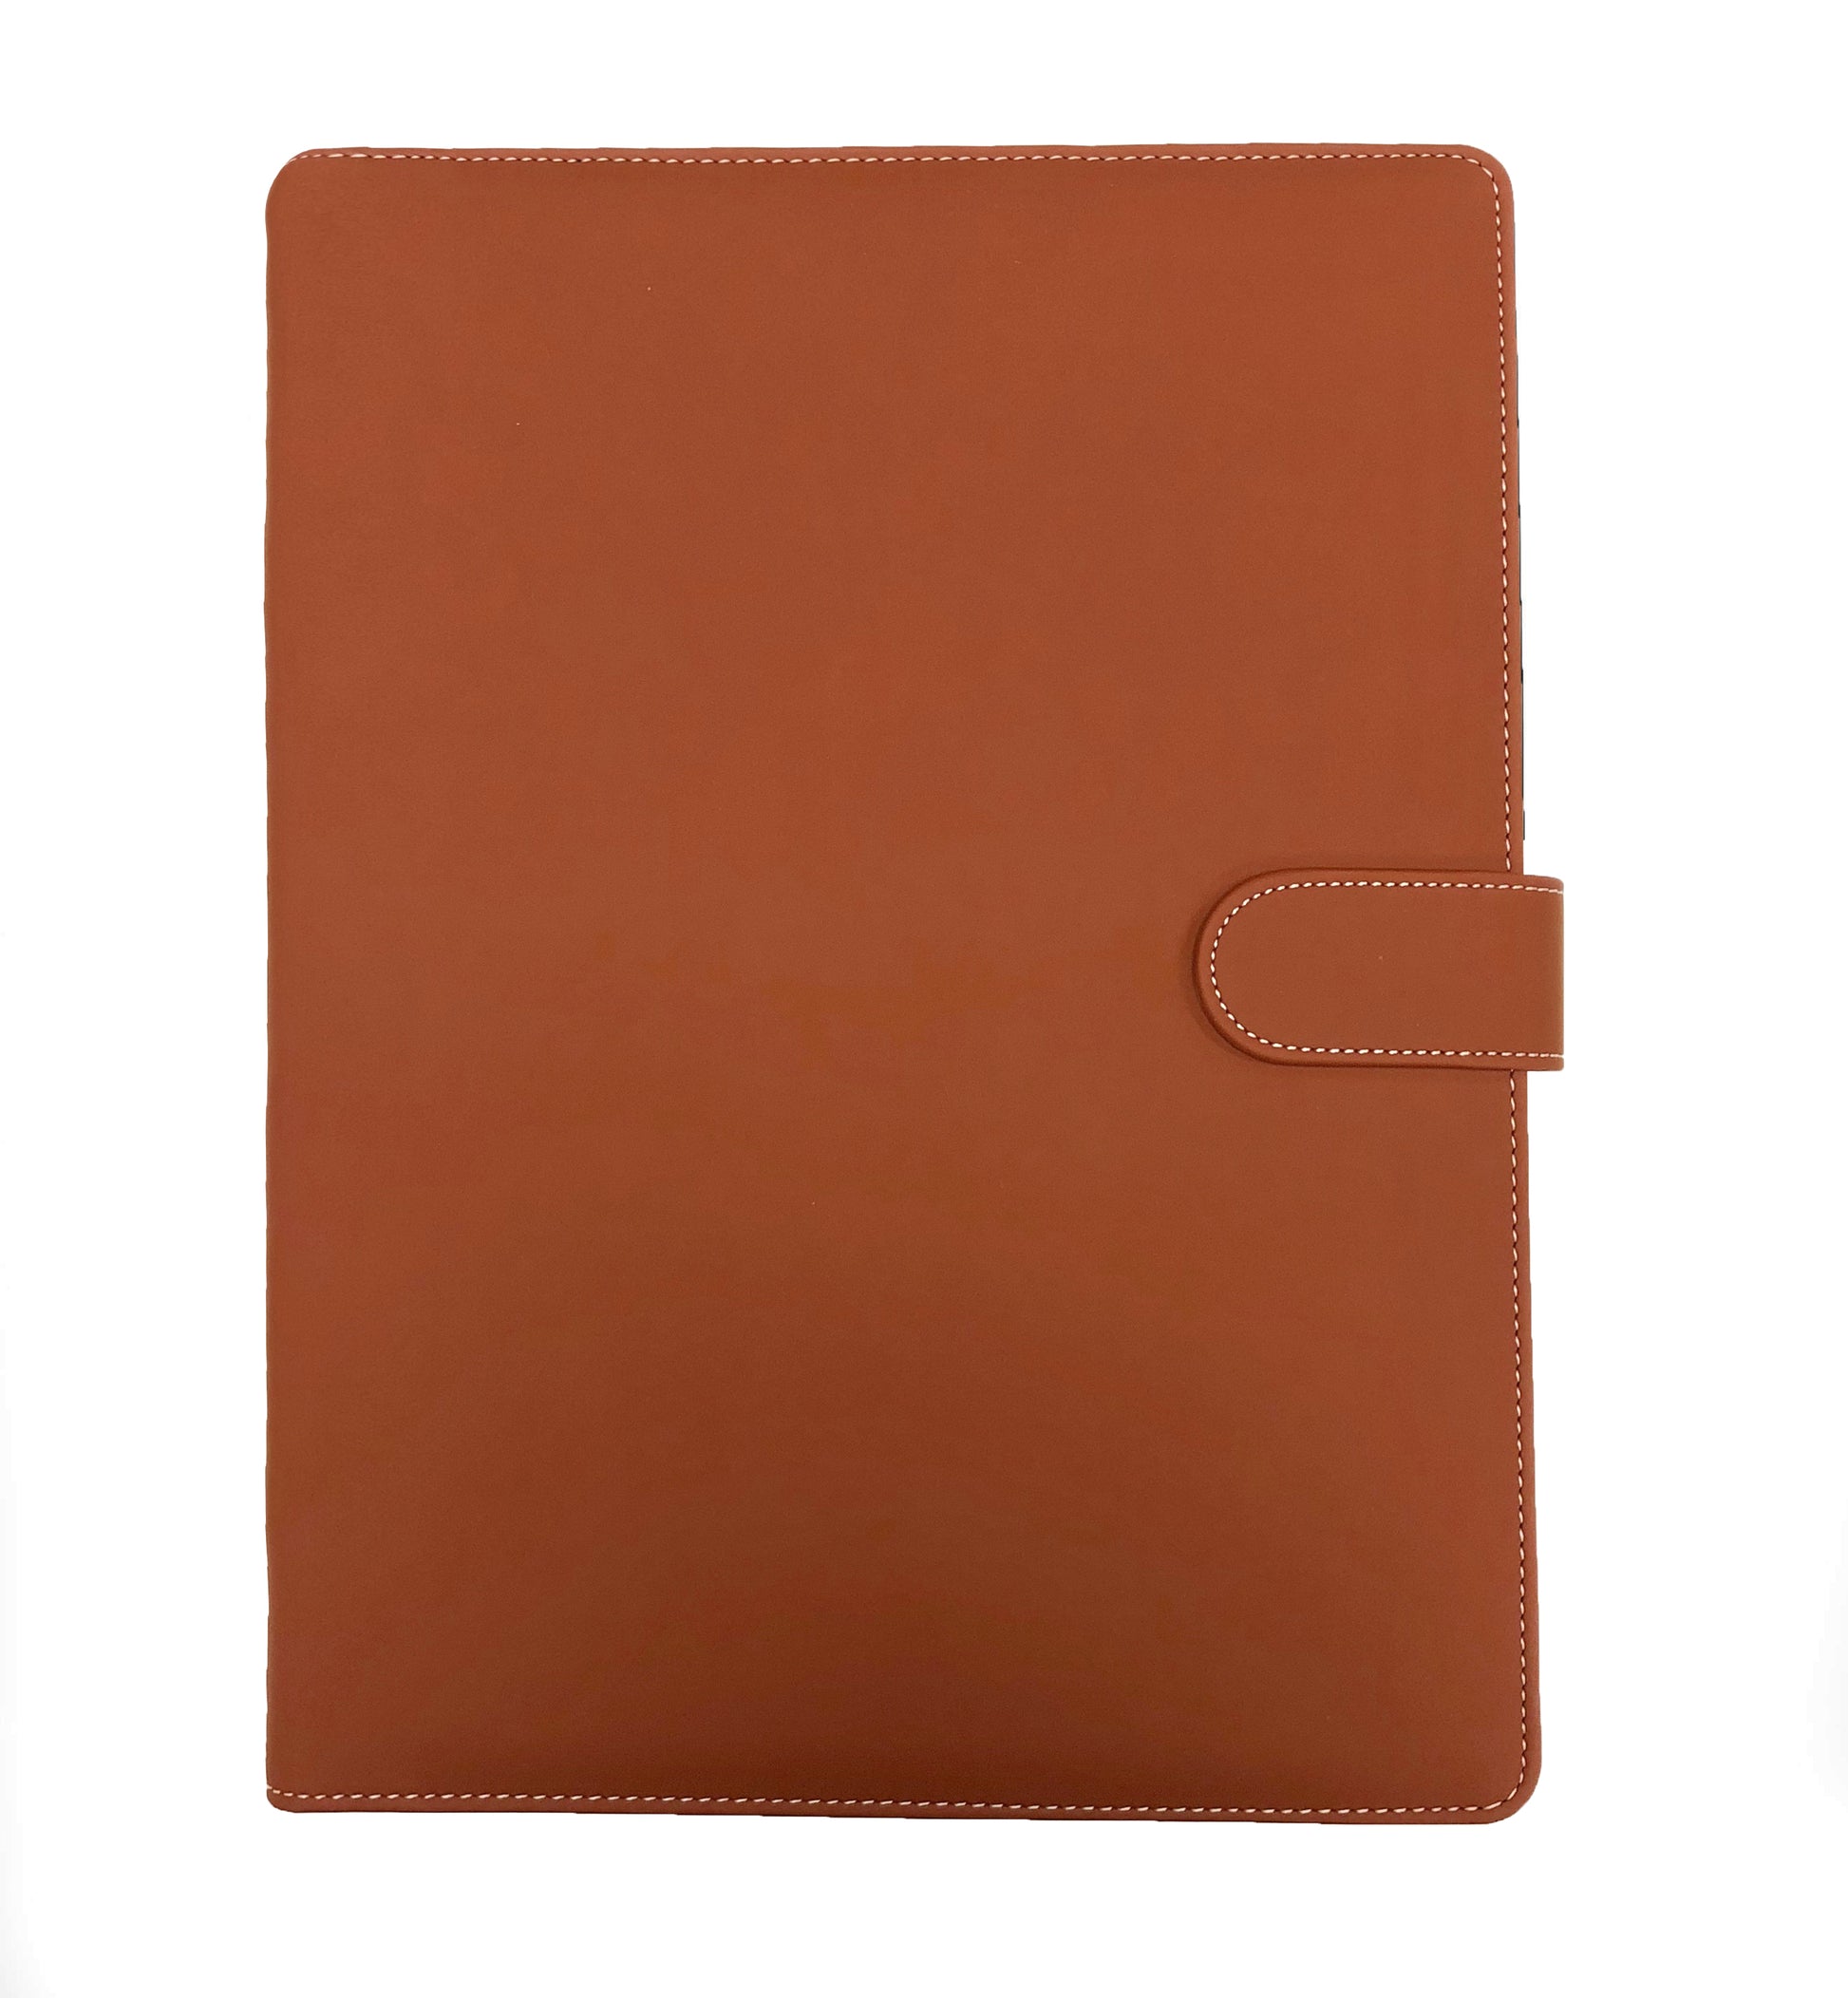 Portfolio Binder Leather Zippered Padfolio Folder Business Case Organizer  Bag fo